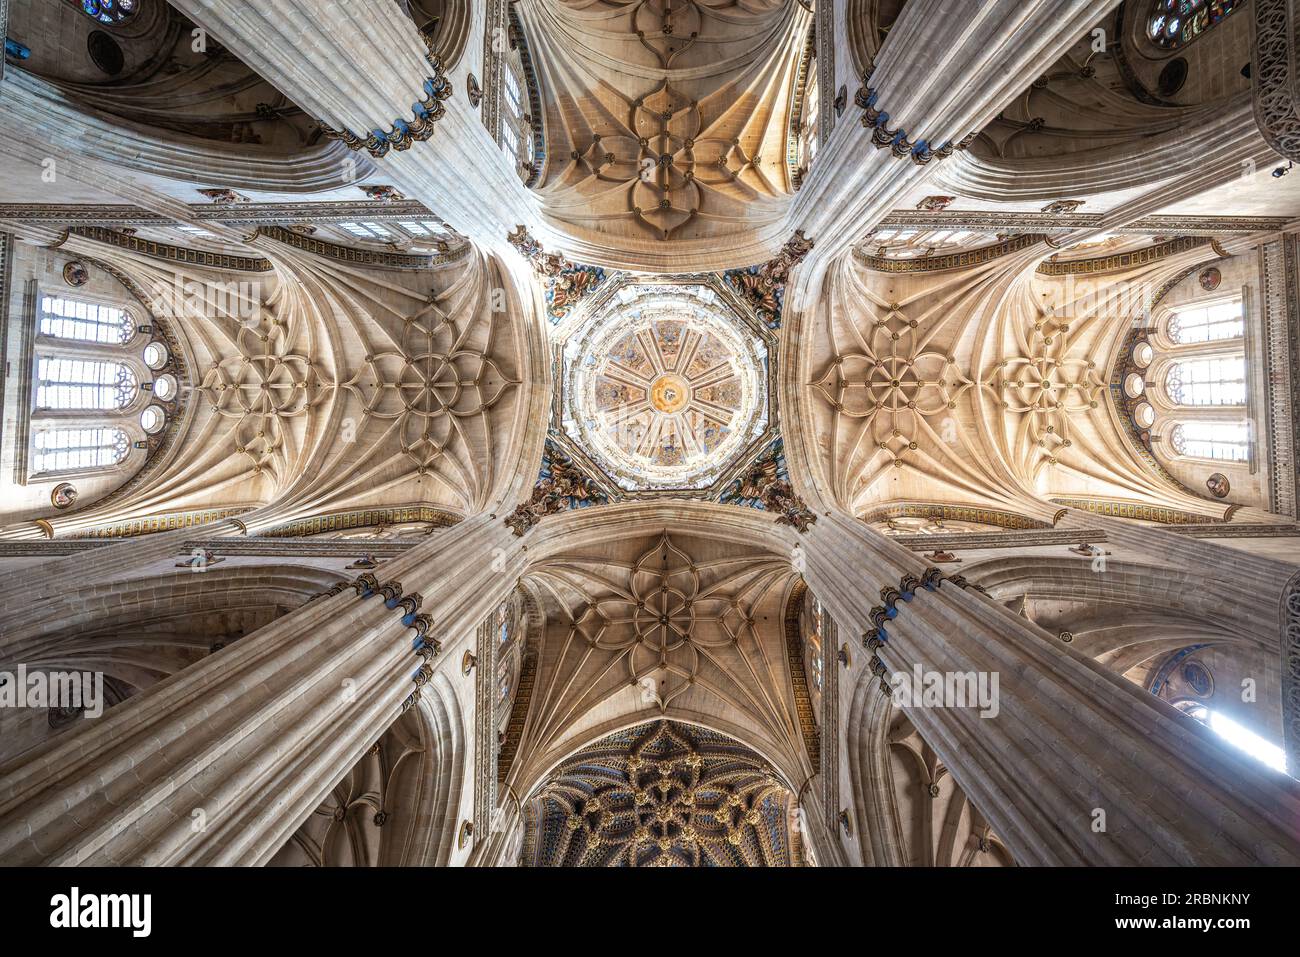 New Cathedral of Salamanca Ceiling - Salamanca, Spain Stock Photo